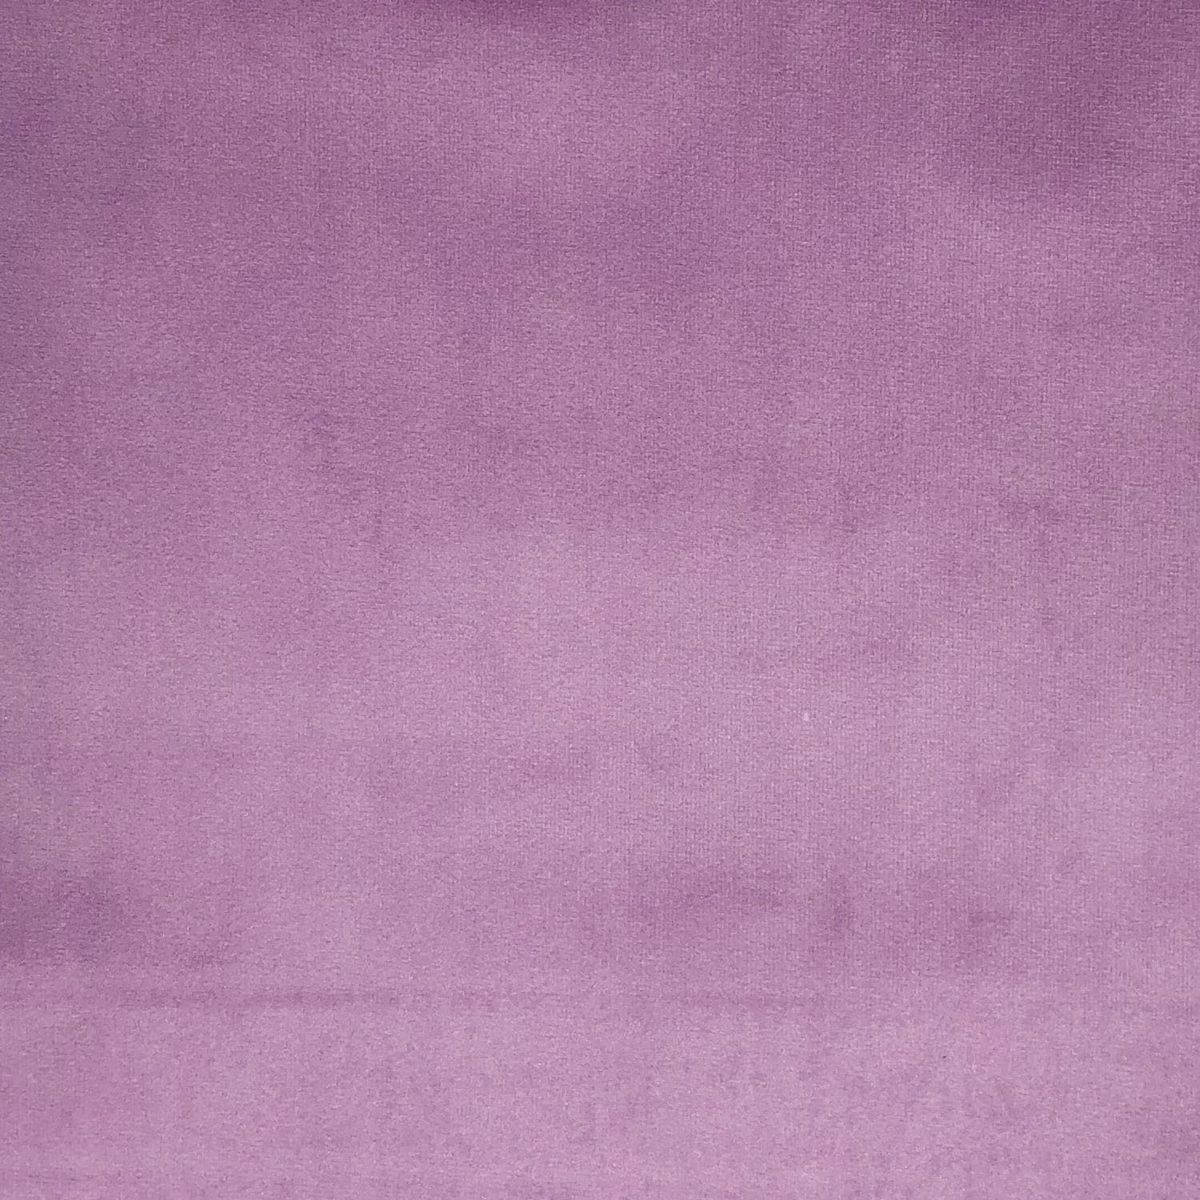 London Lavender Fabric by Chatham Glyn